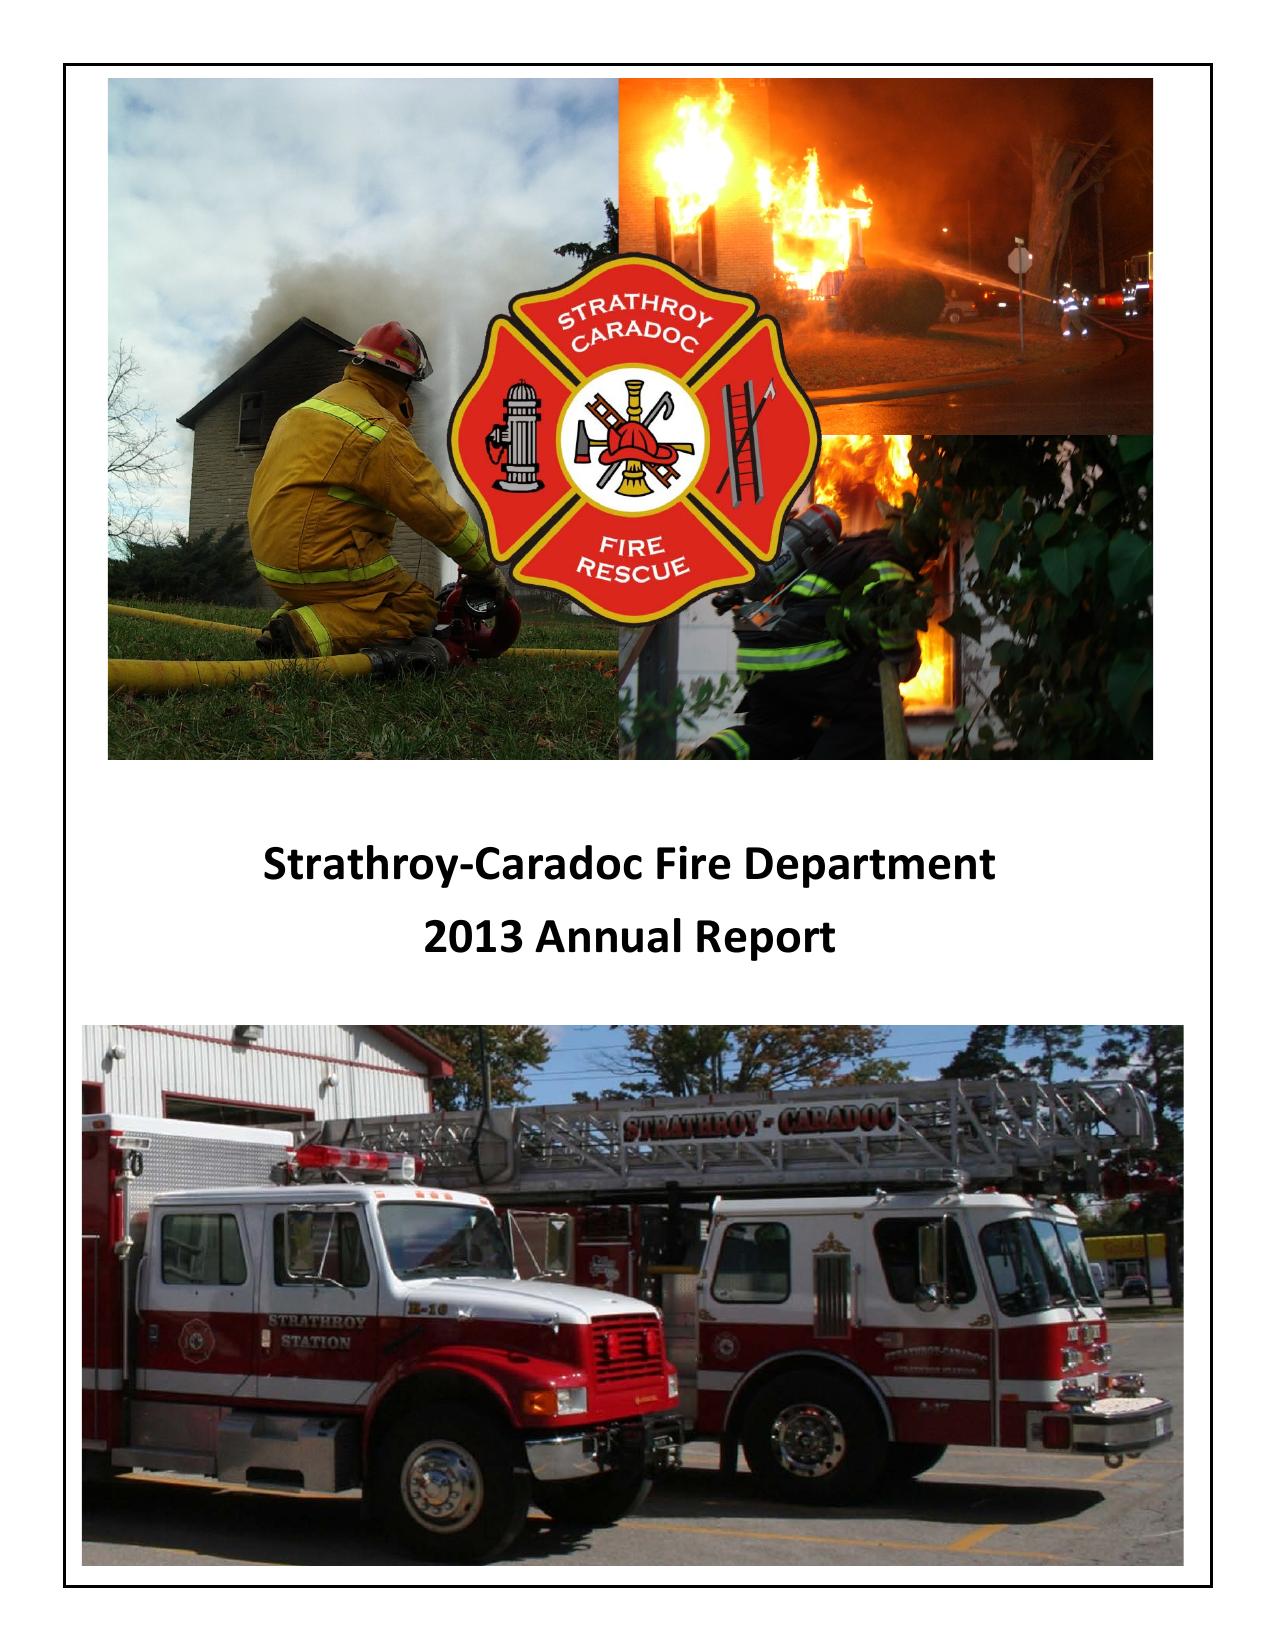 STRATHROY-CARADOC Annual Report